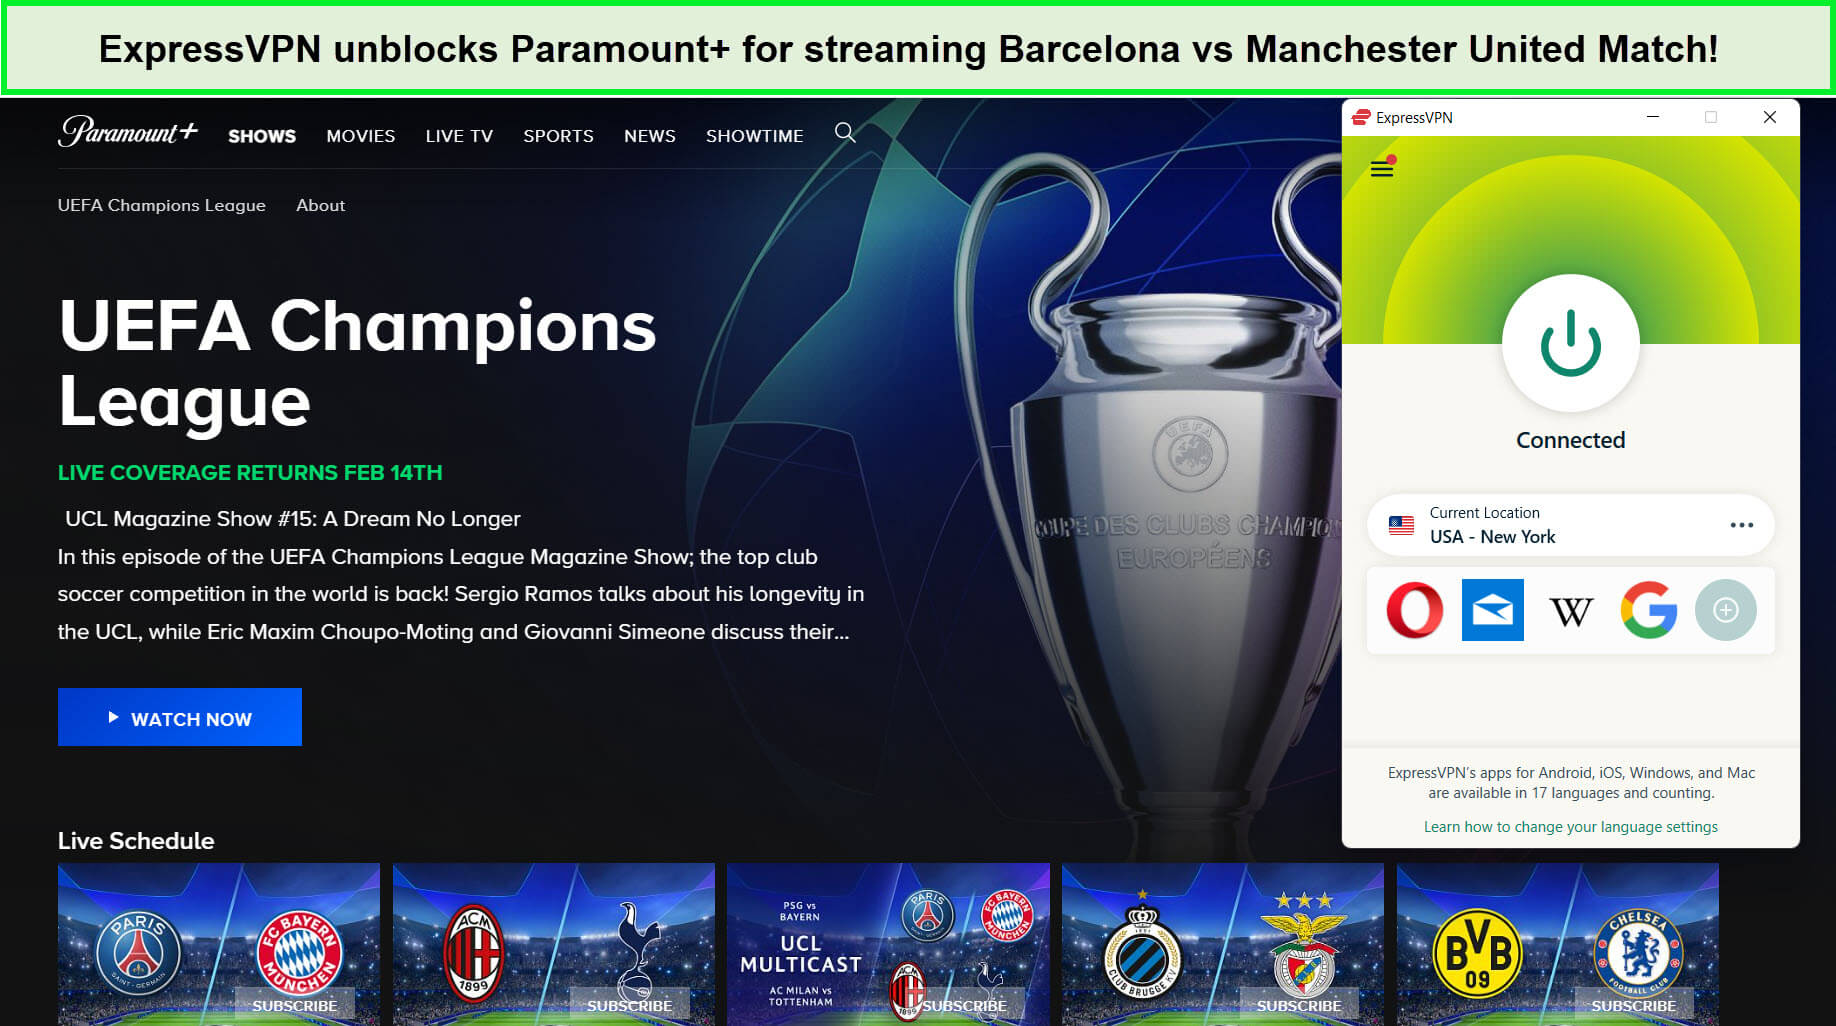 expressvpn-unblocks-paramount-plus-for-barcelona-vs-man-united-live-streaming